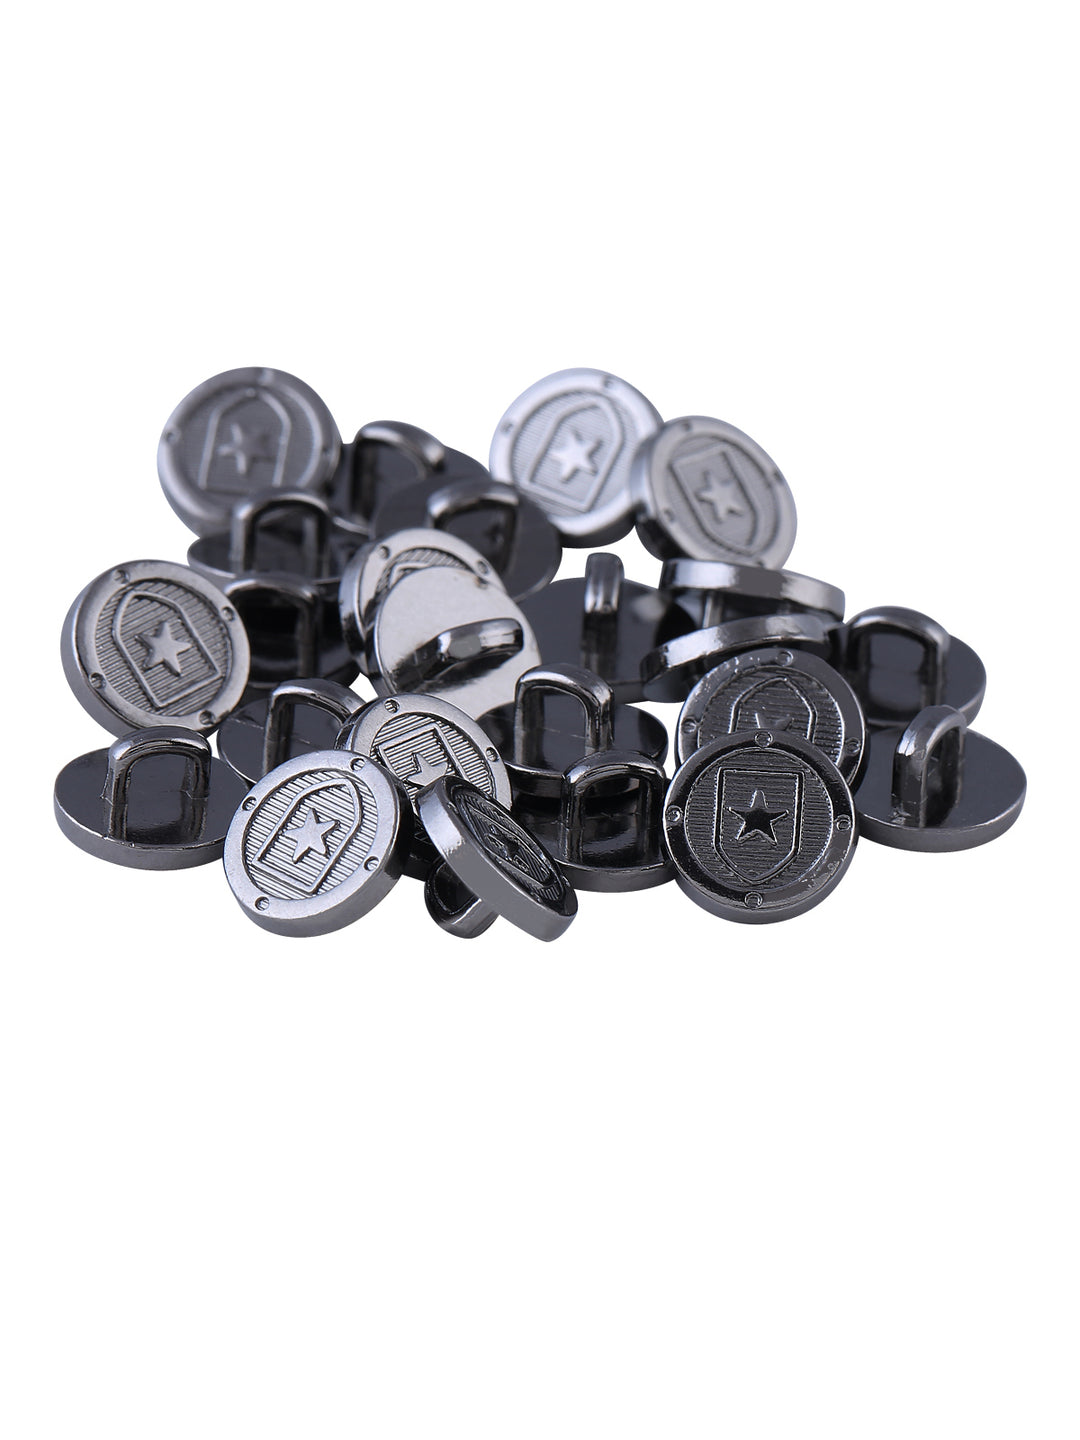 Royal Star Badge Design Downhole Metal Button in Black Nickel (Gunmetal) Color